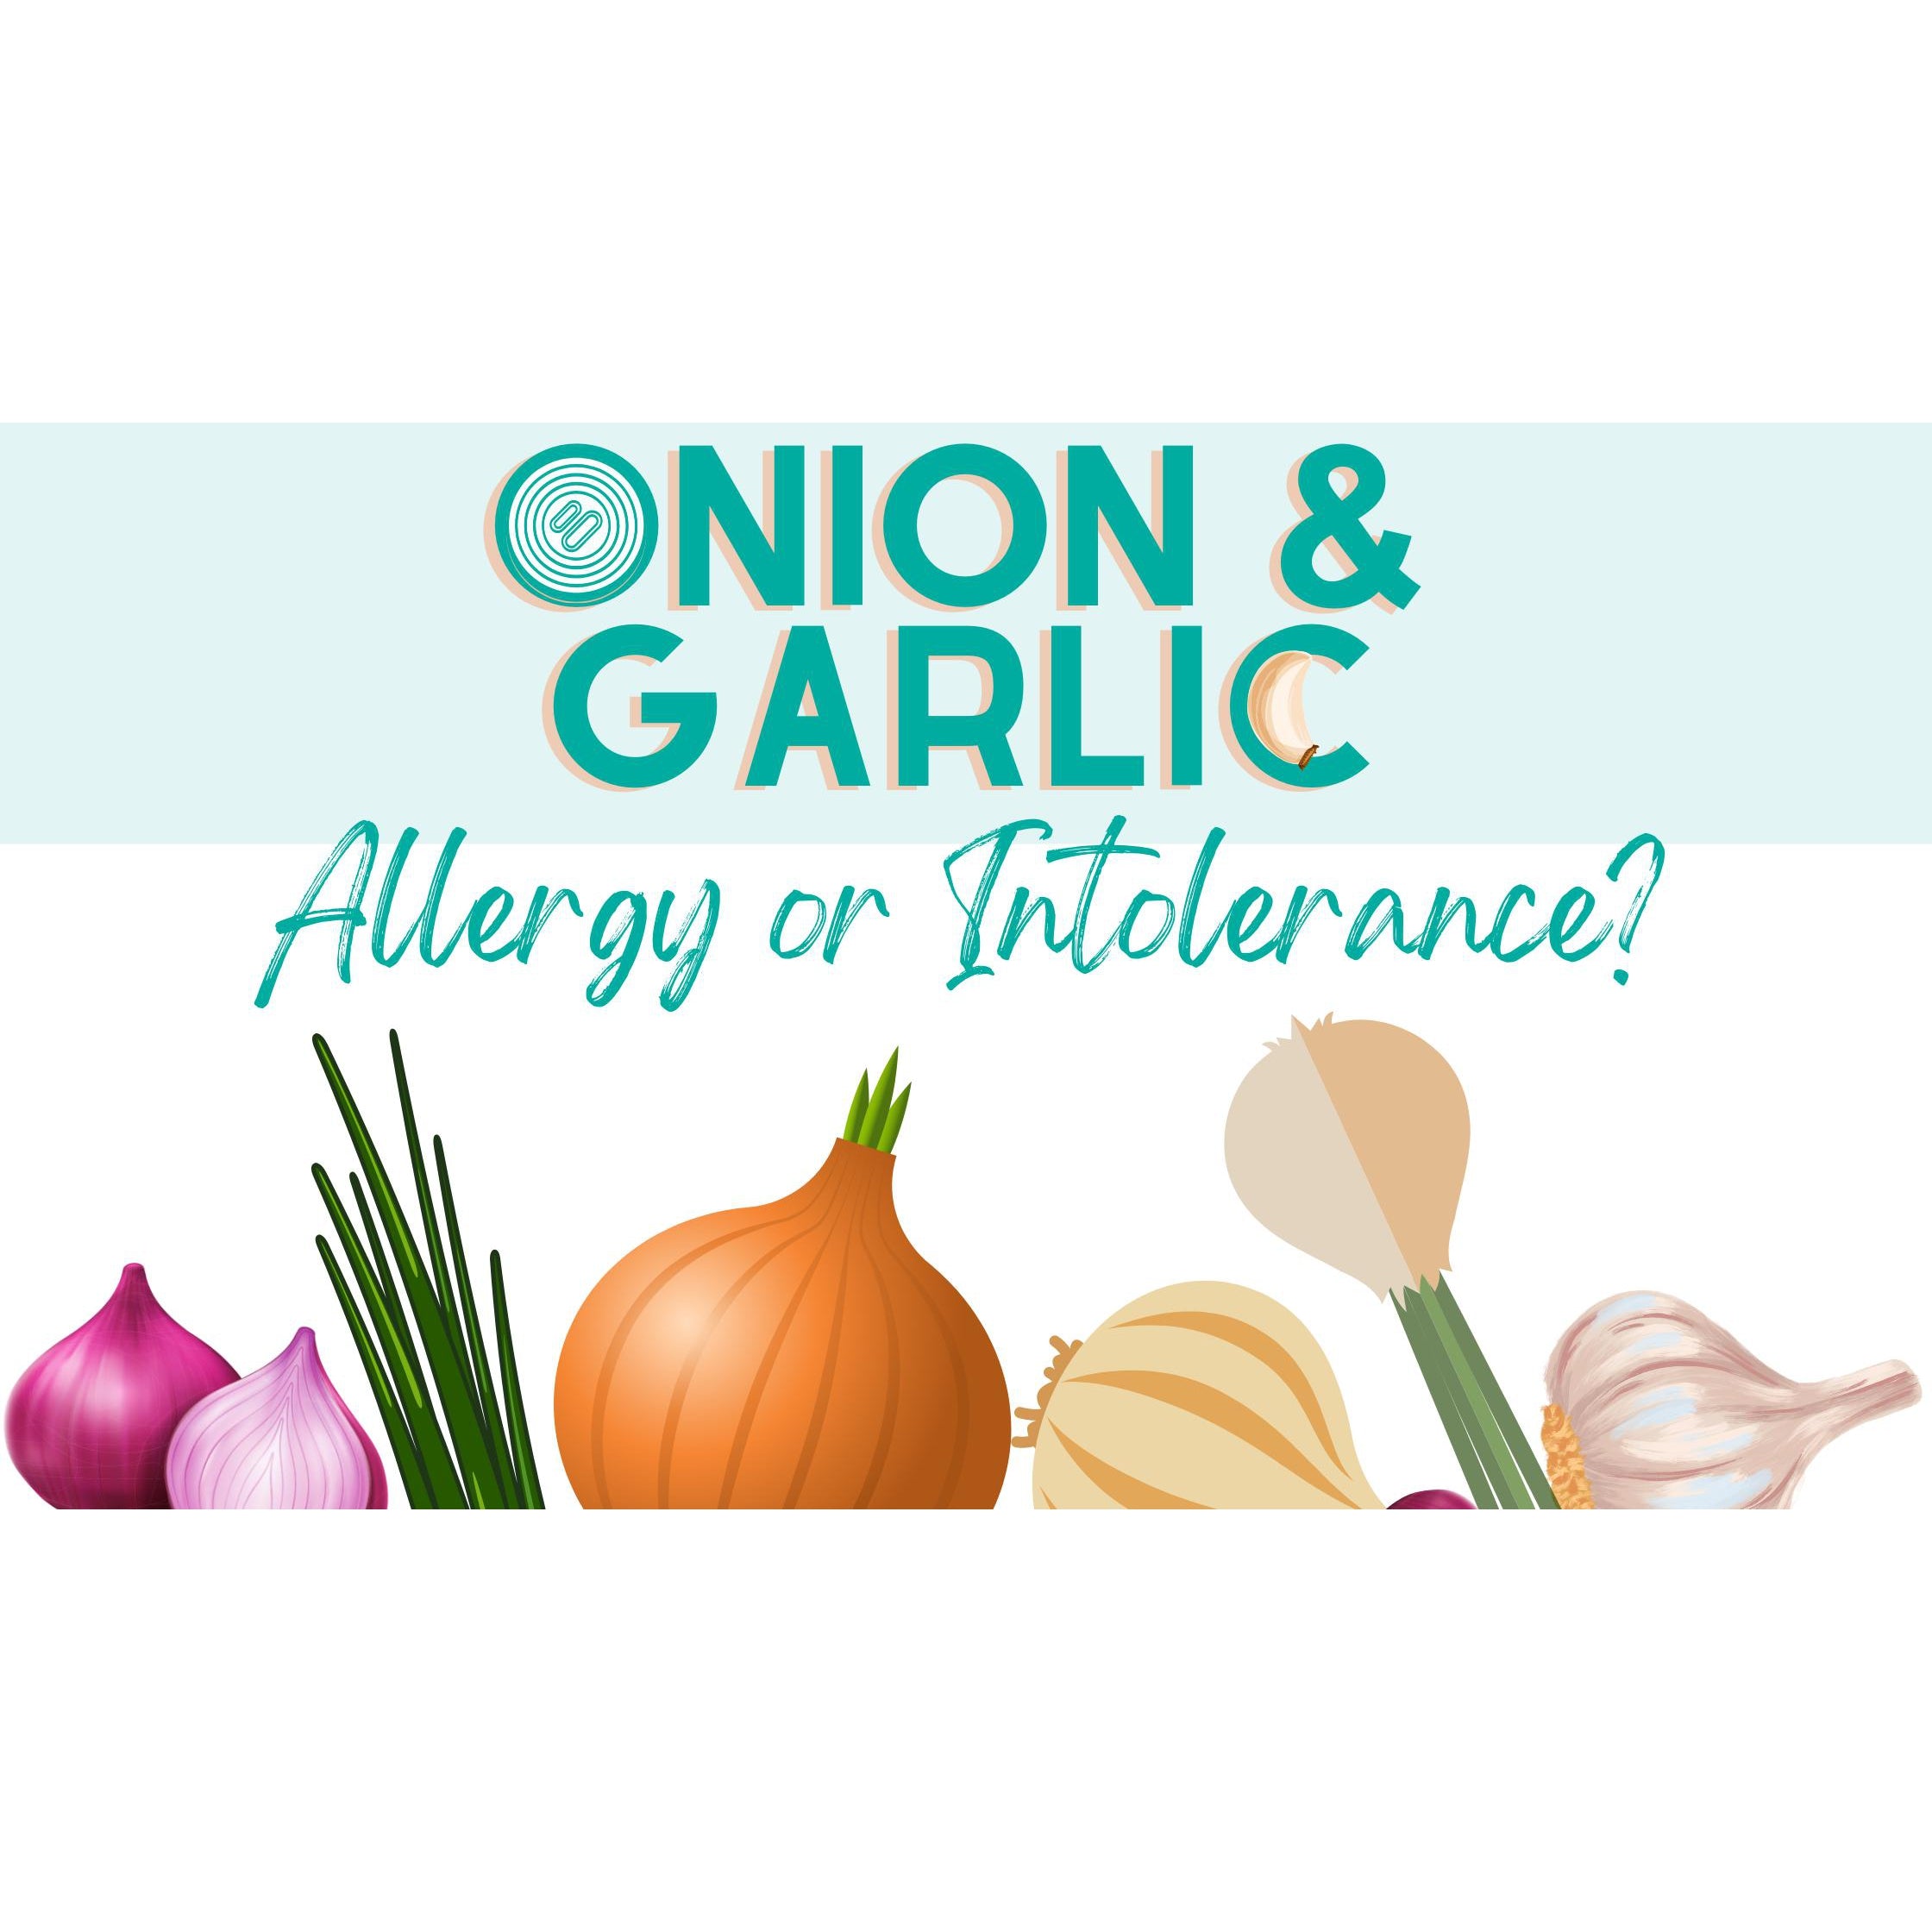 Green Onions vs. Chives vs. Shallots - Evolving Table